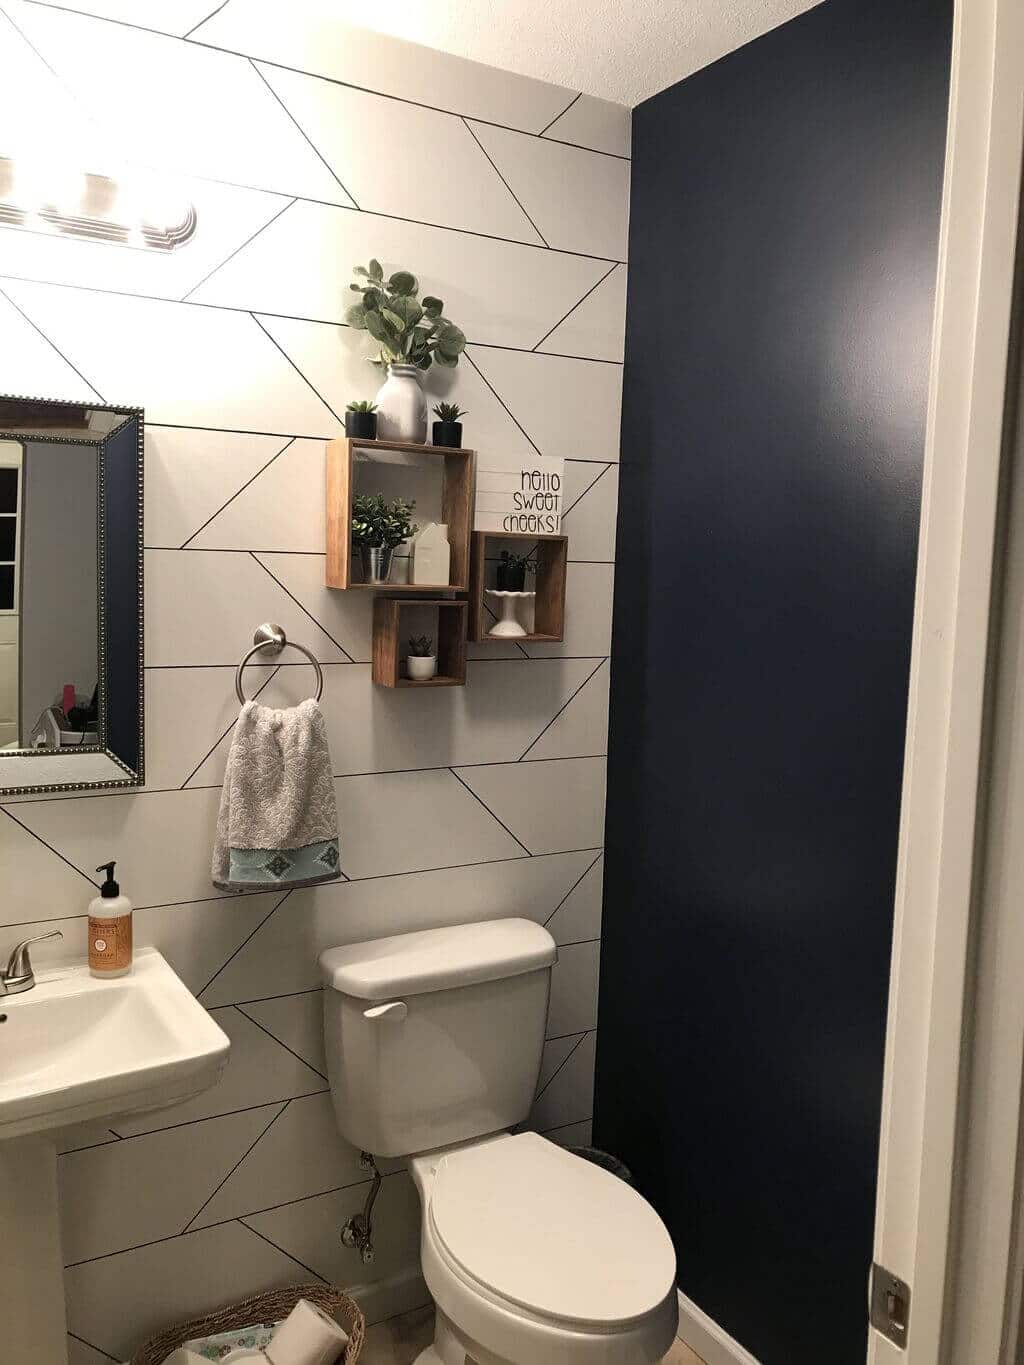 A white toilet sitting next to a bathroom sink
